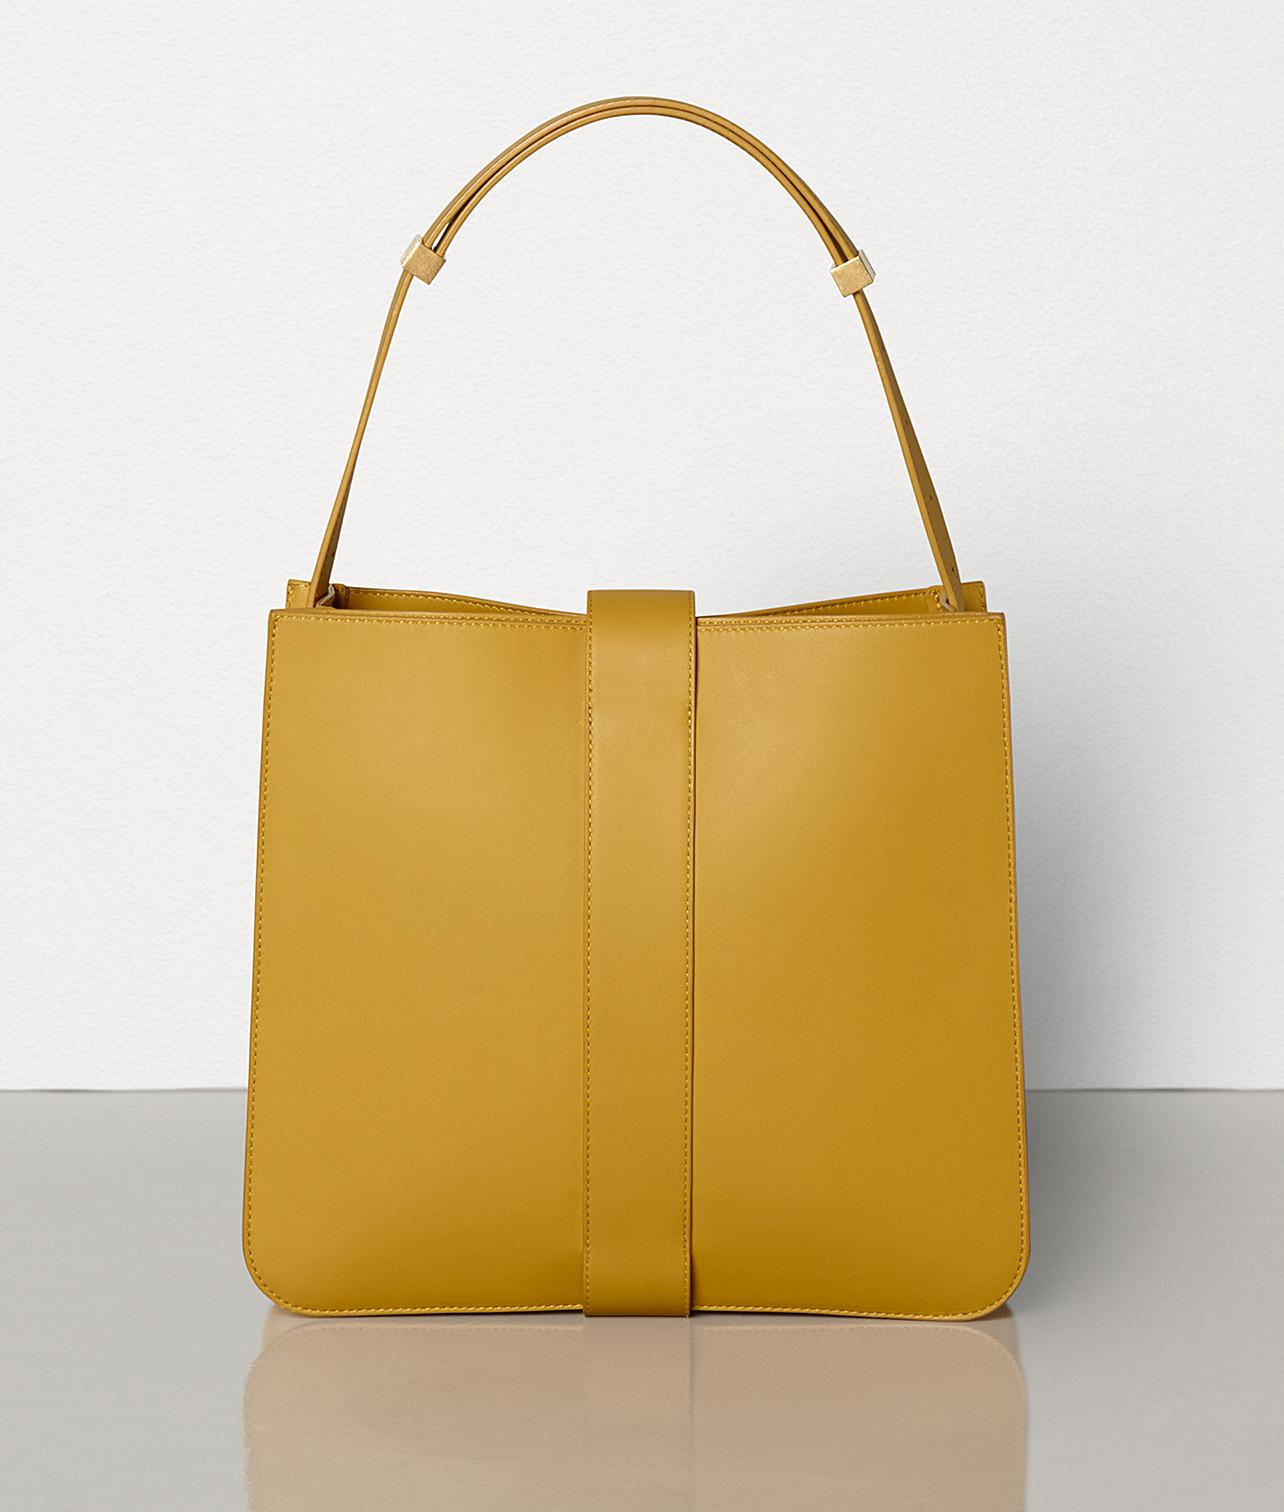 Bottega Veneta The Marie Leather Shoulder Bag in Yellow | Lyst